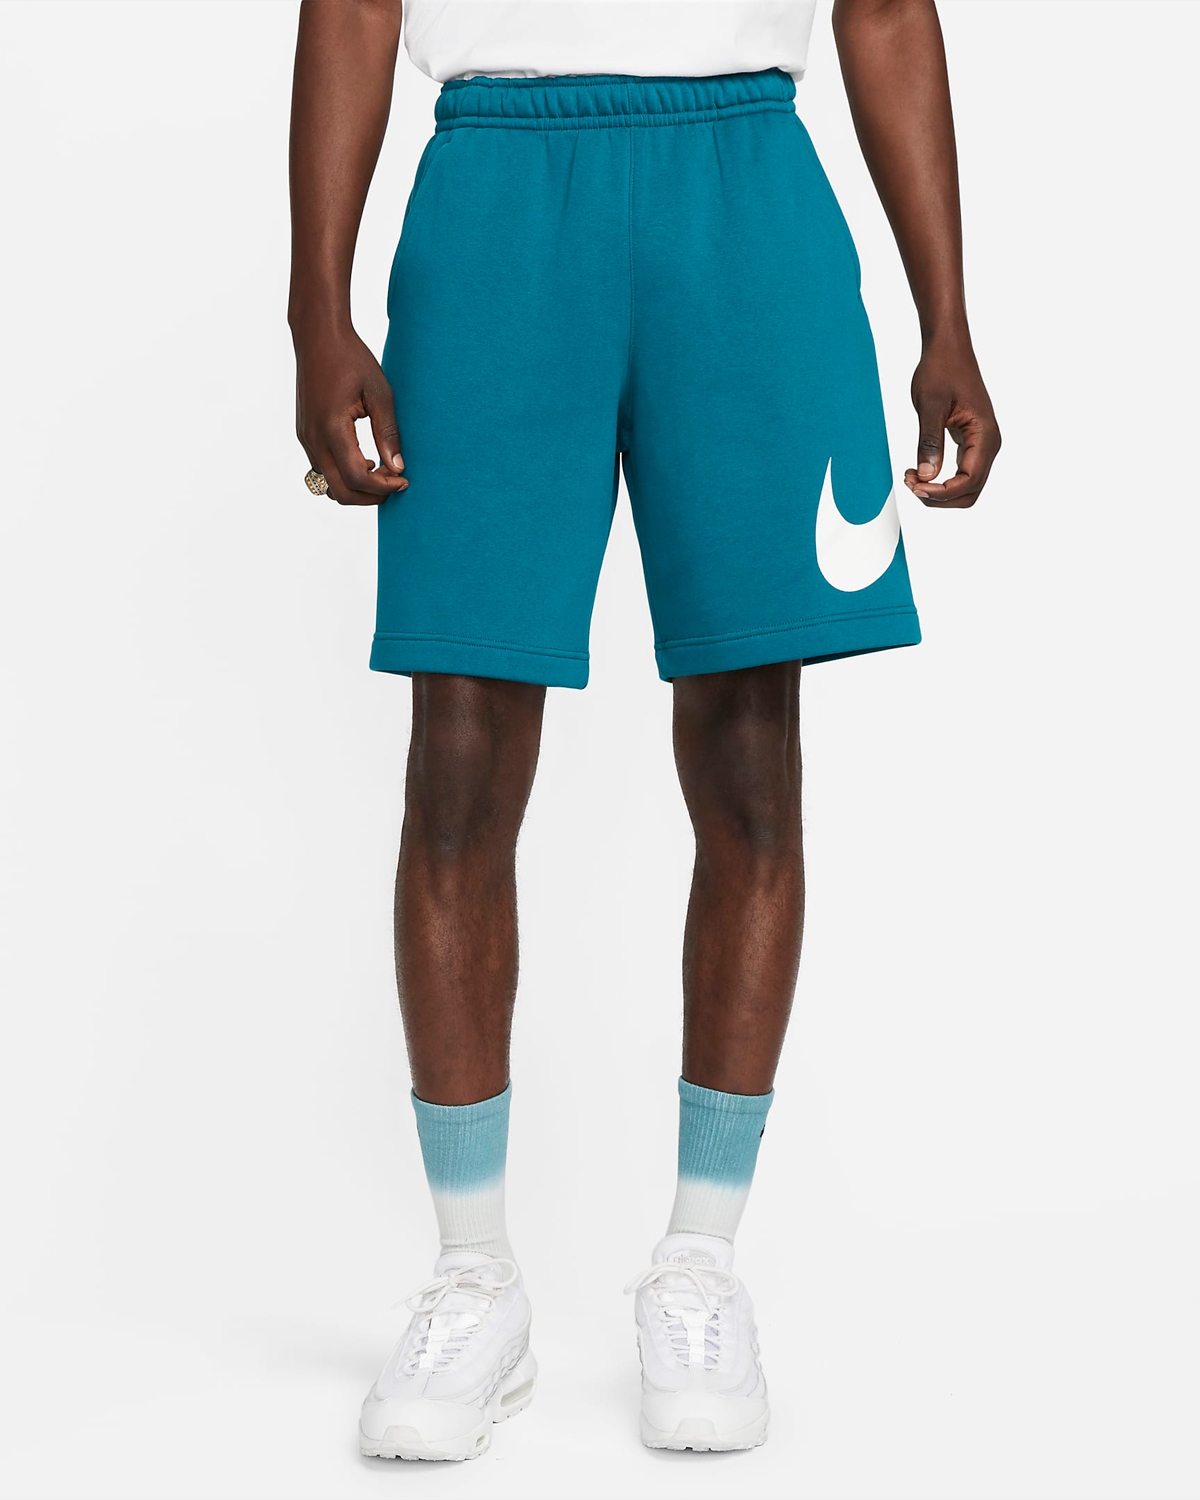 Nike-Sportswear-Club-Fleece-Graphic-Shorts-Geode-Teal-1